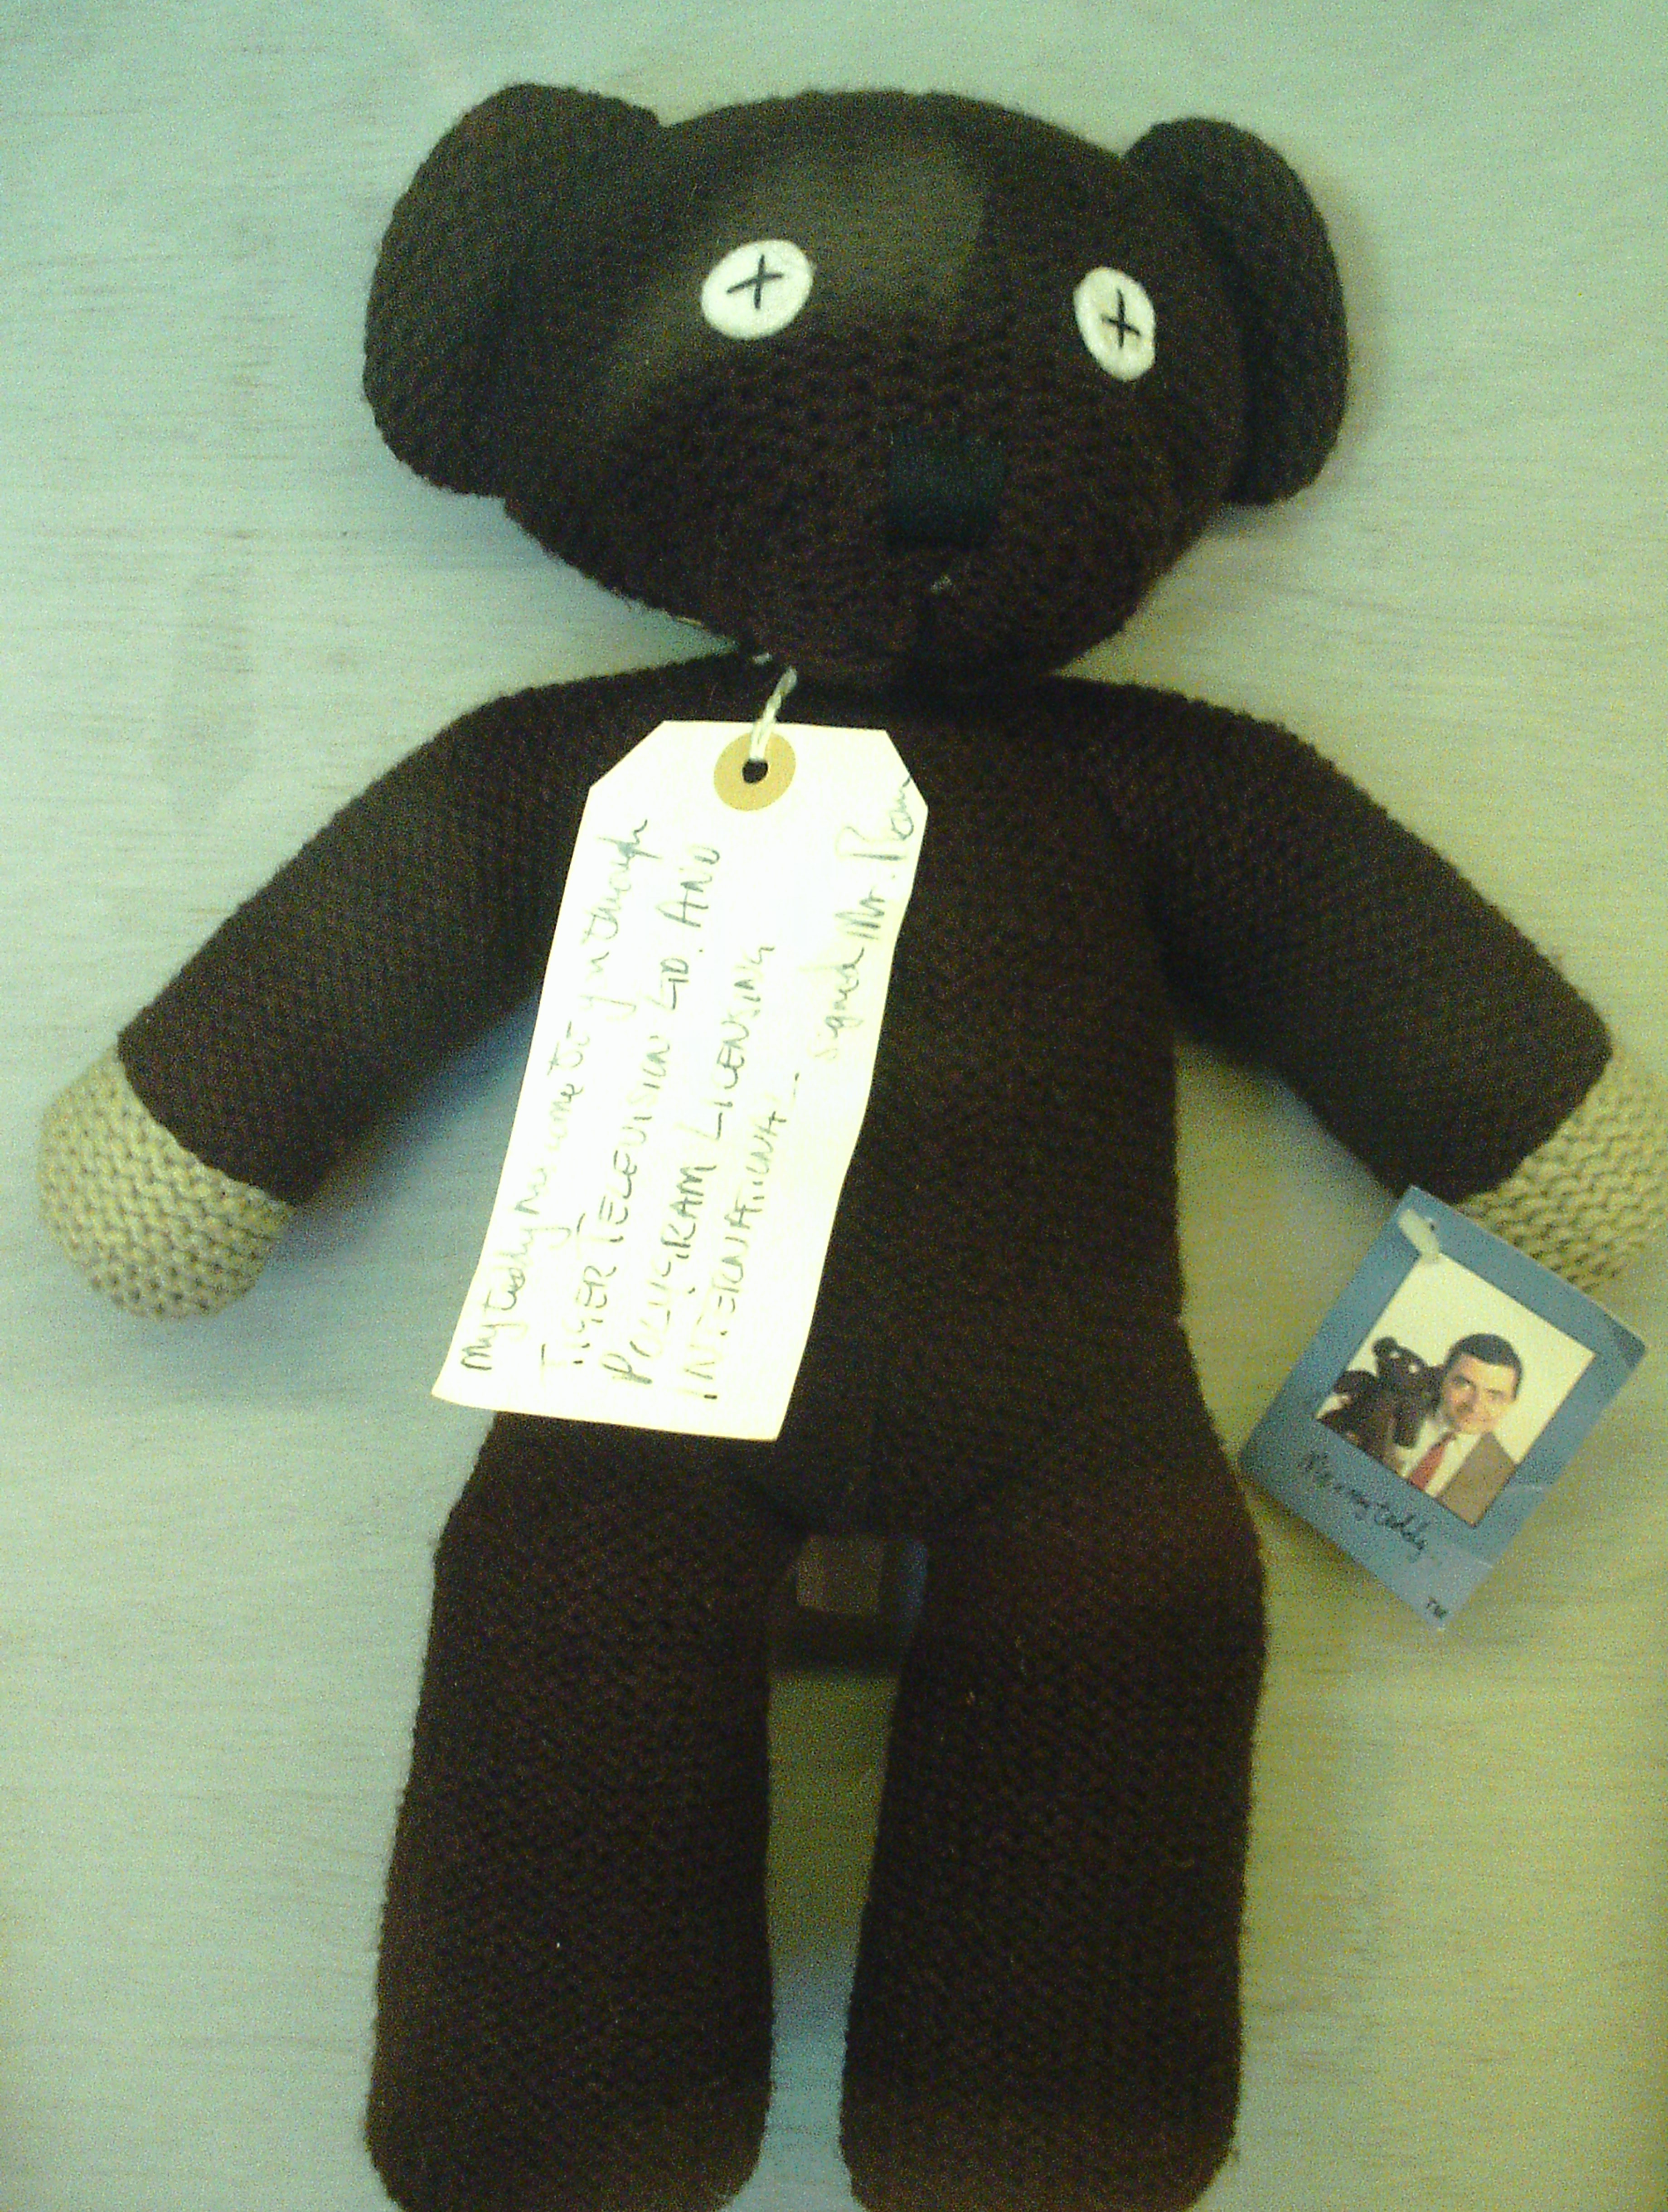 https://upload.wikimedia.org/wikipedia/commons/d/d8/Mr_Bean%27s_teddy_bear.jpg